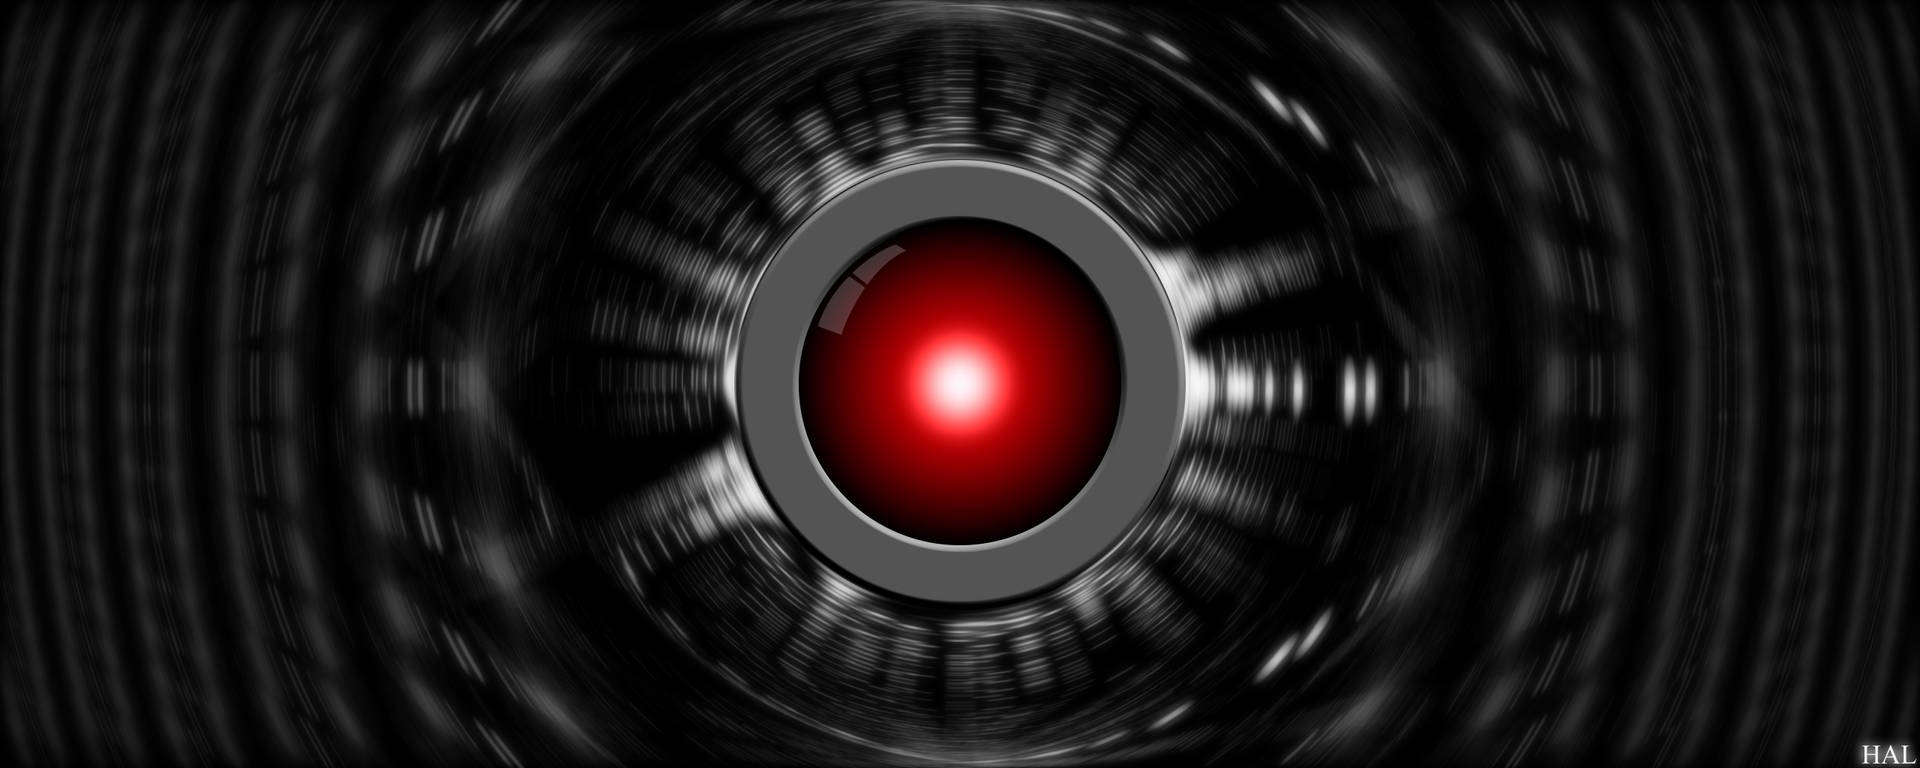 Hal 9000 Robotic Red Eye Background